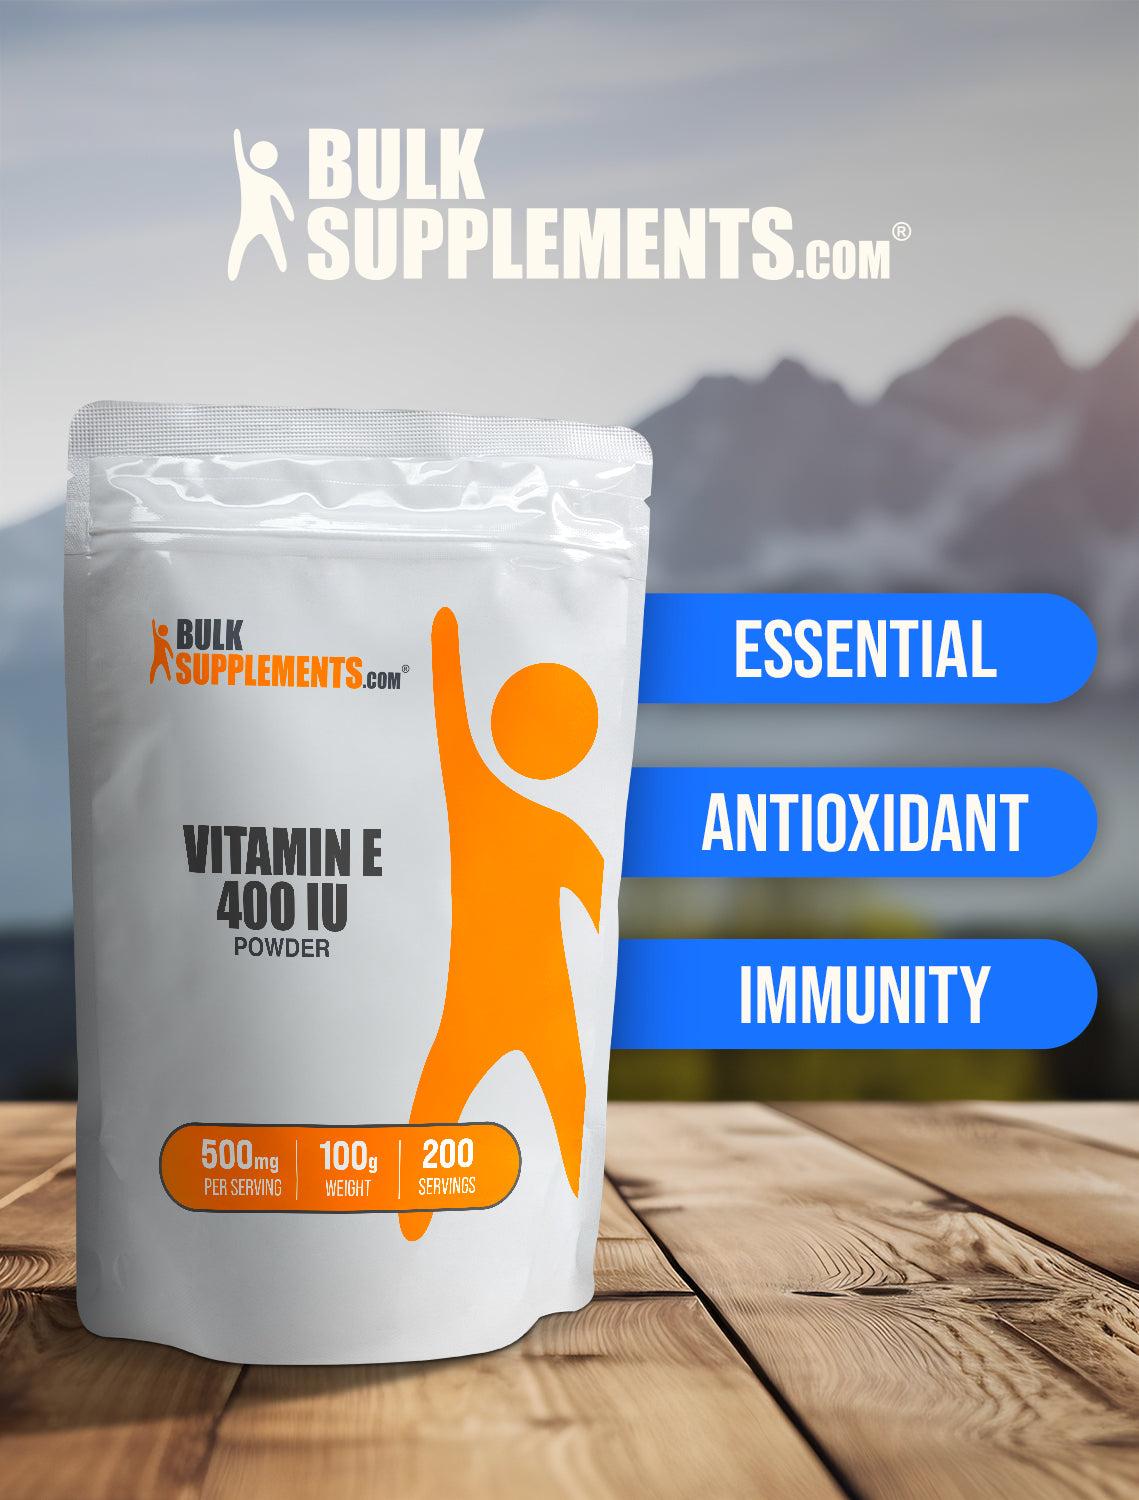 Vitamin E powder keyword image 100g